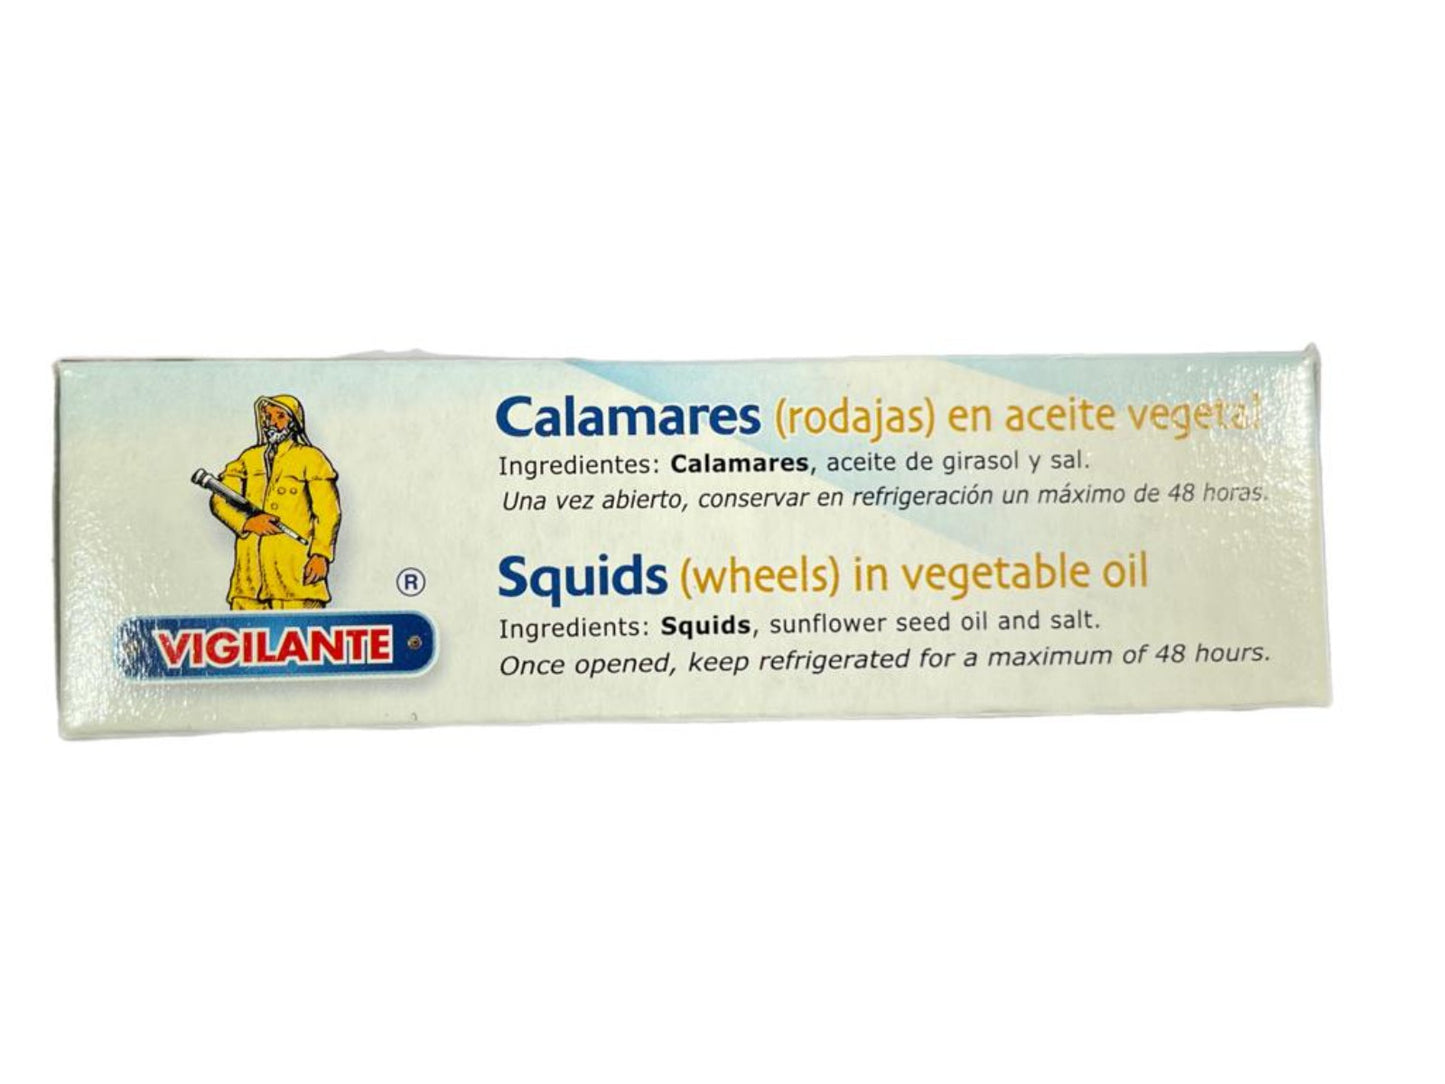 Vigilante Calamares Rodajas en Aceite Vegetal Calamari in Vegetable Oil 115g